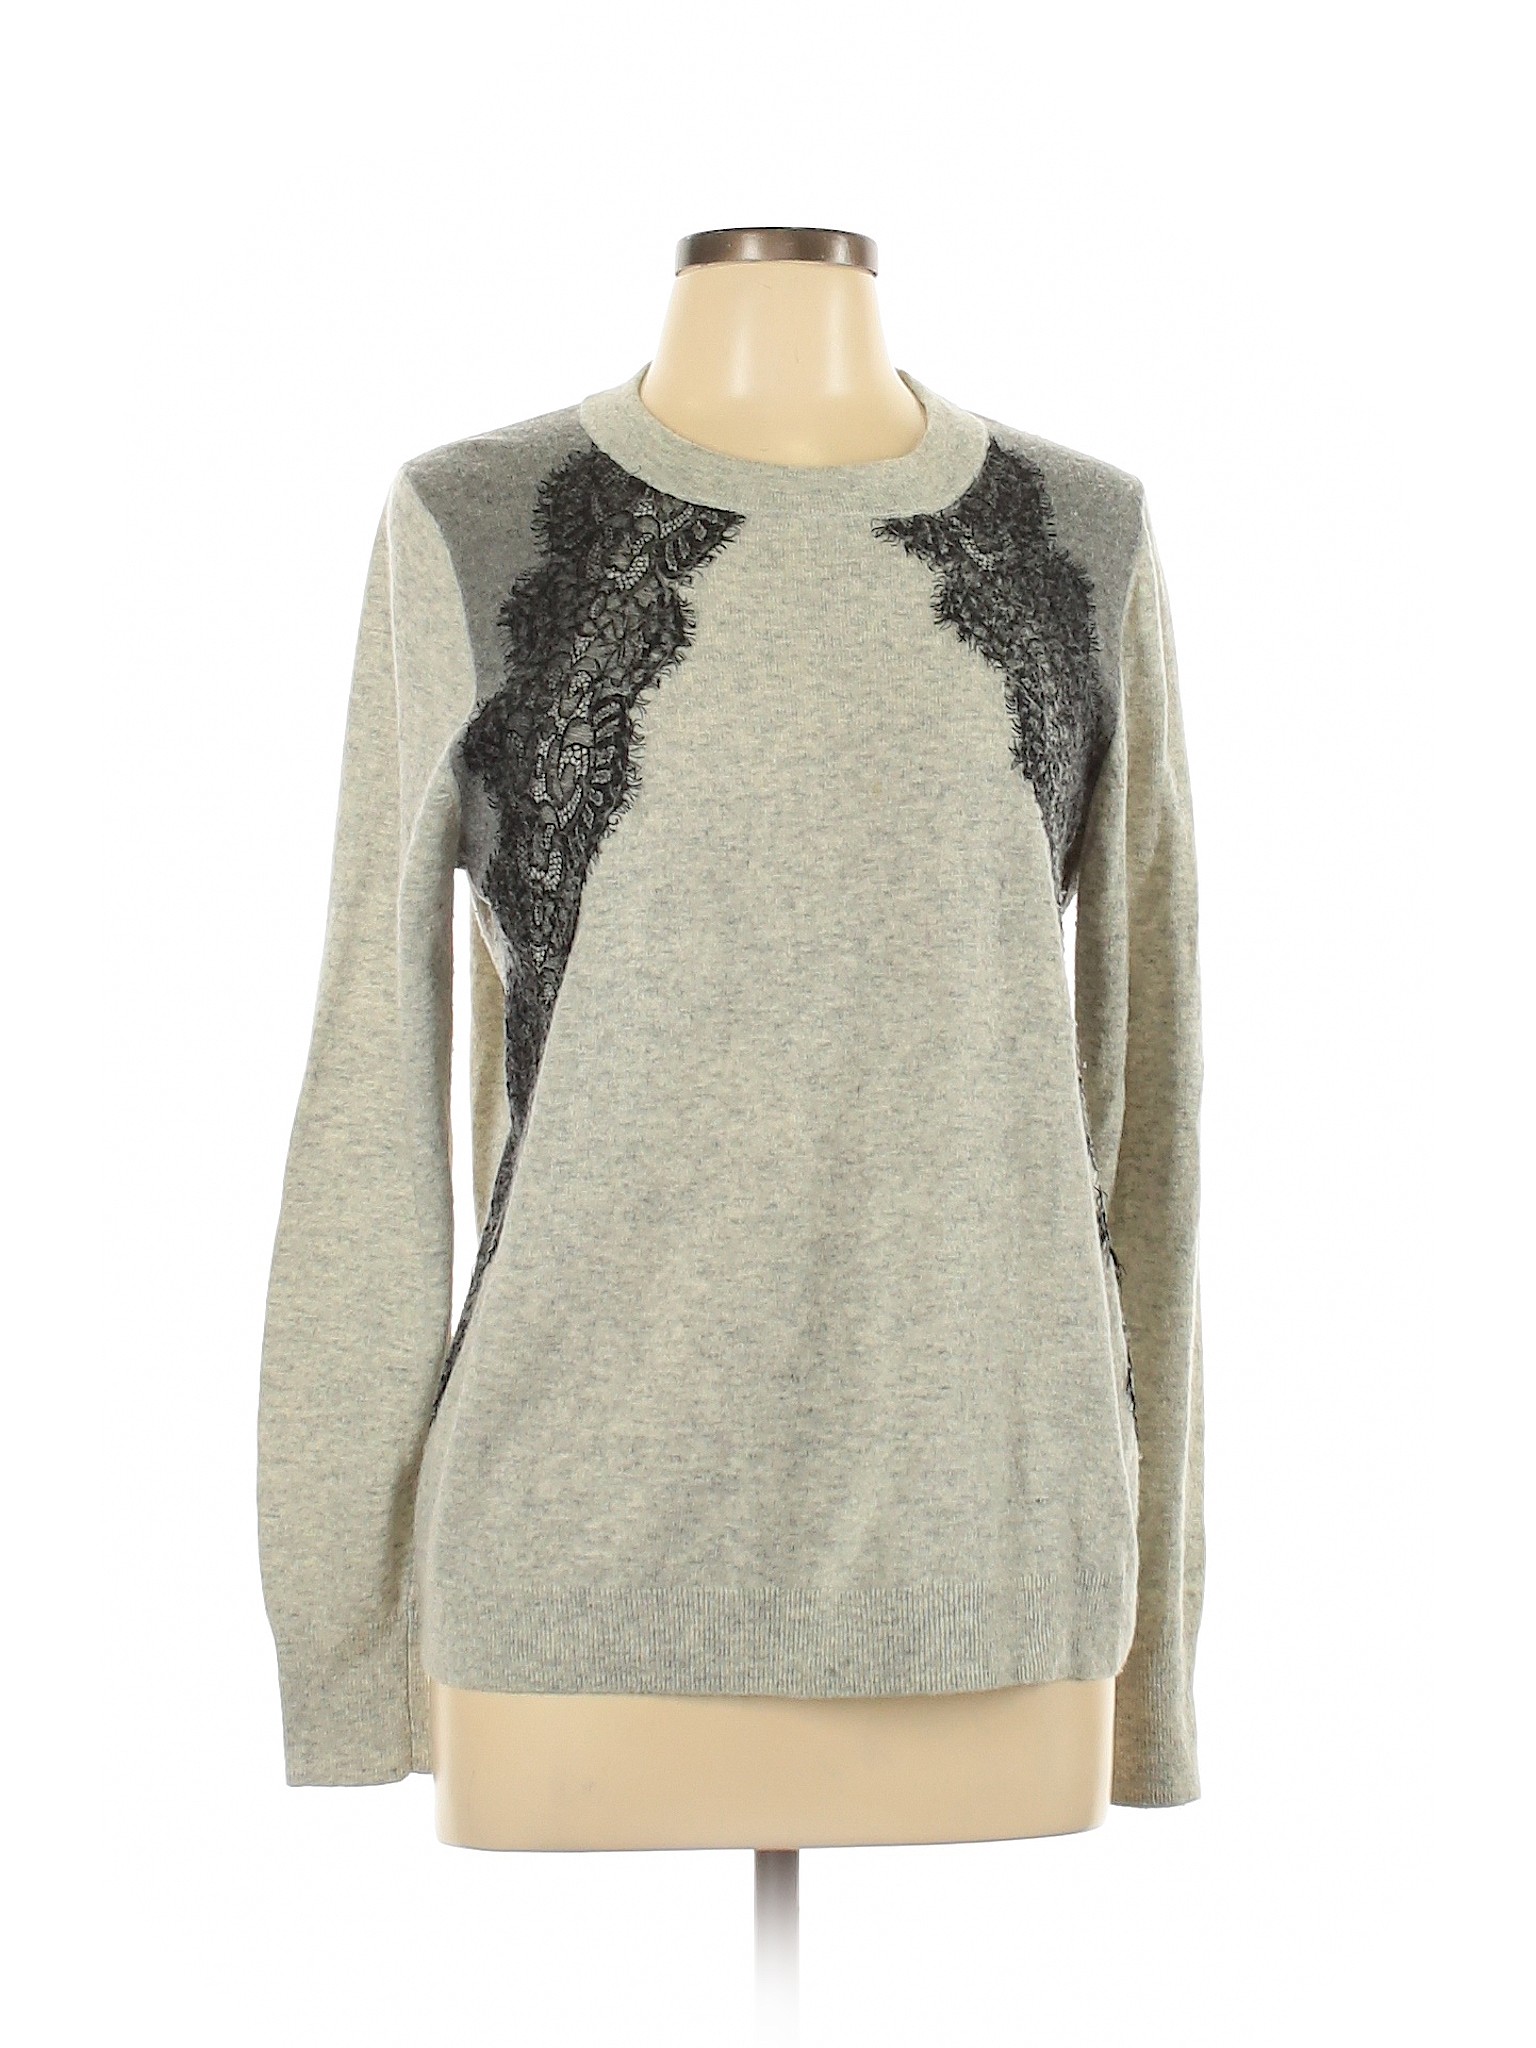 J.Crew Women Gray Pullover Sweater L | eBay